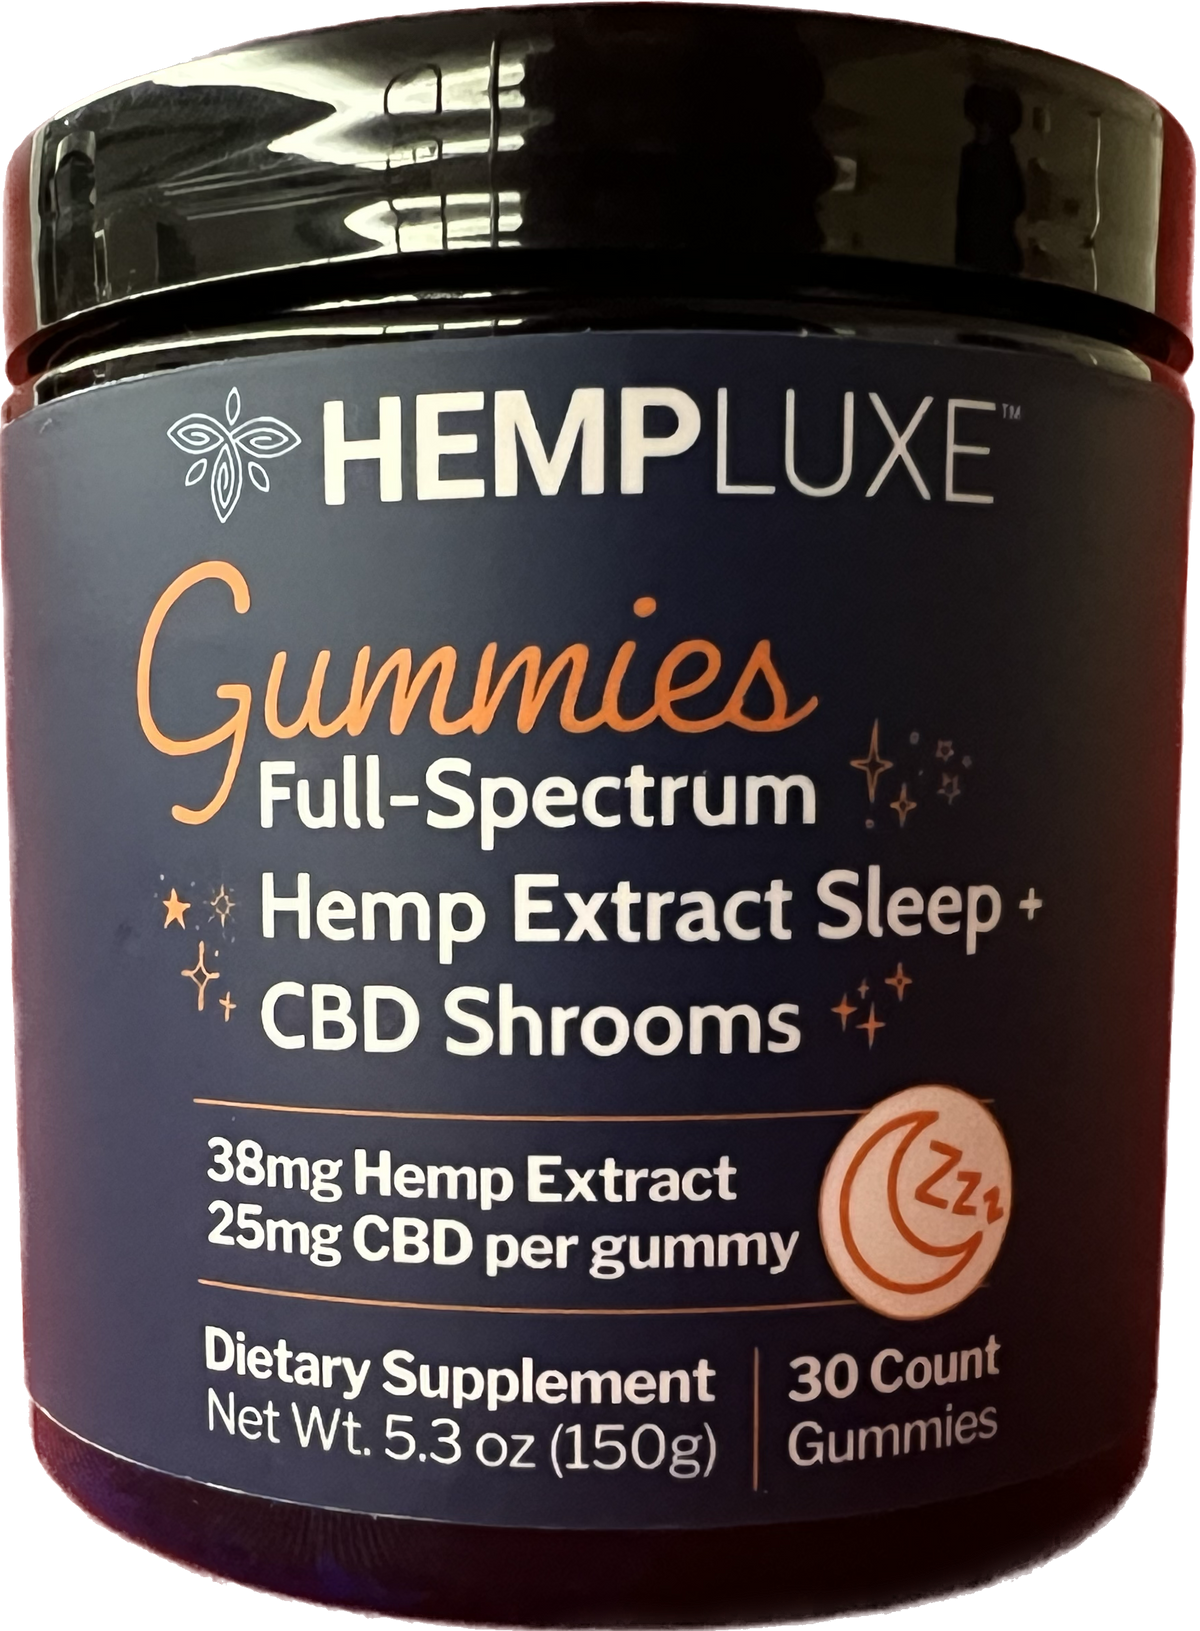 Full-Spectrum Hemp Extract Sleep CBD Shrooms Gummies | 30 Count